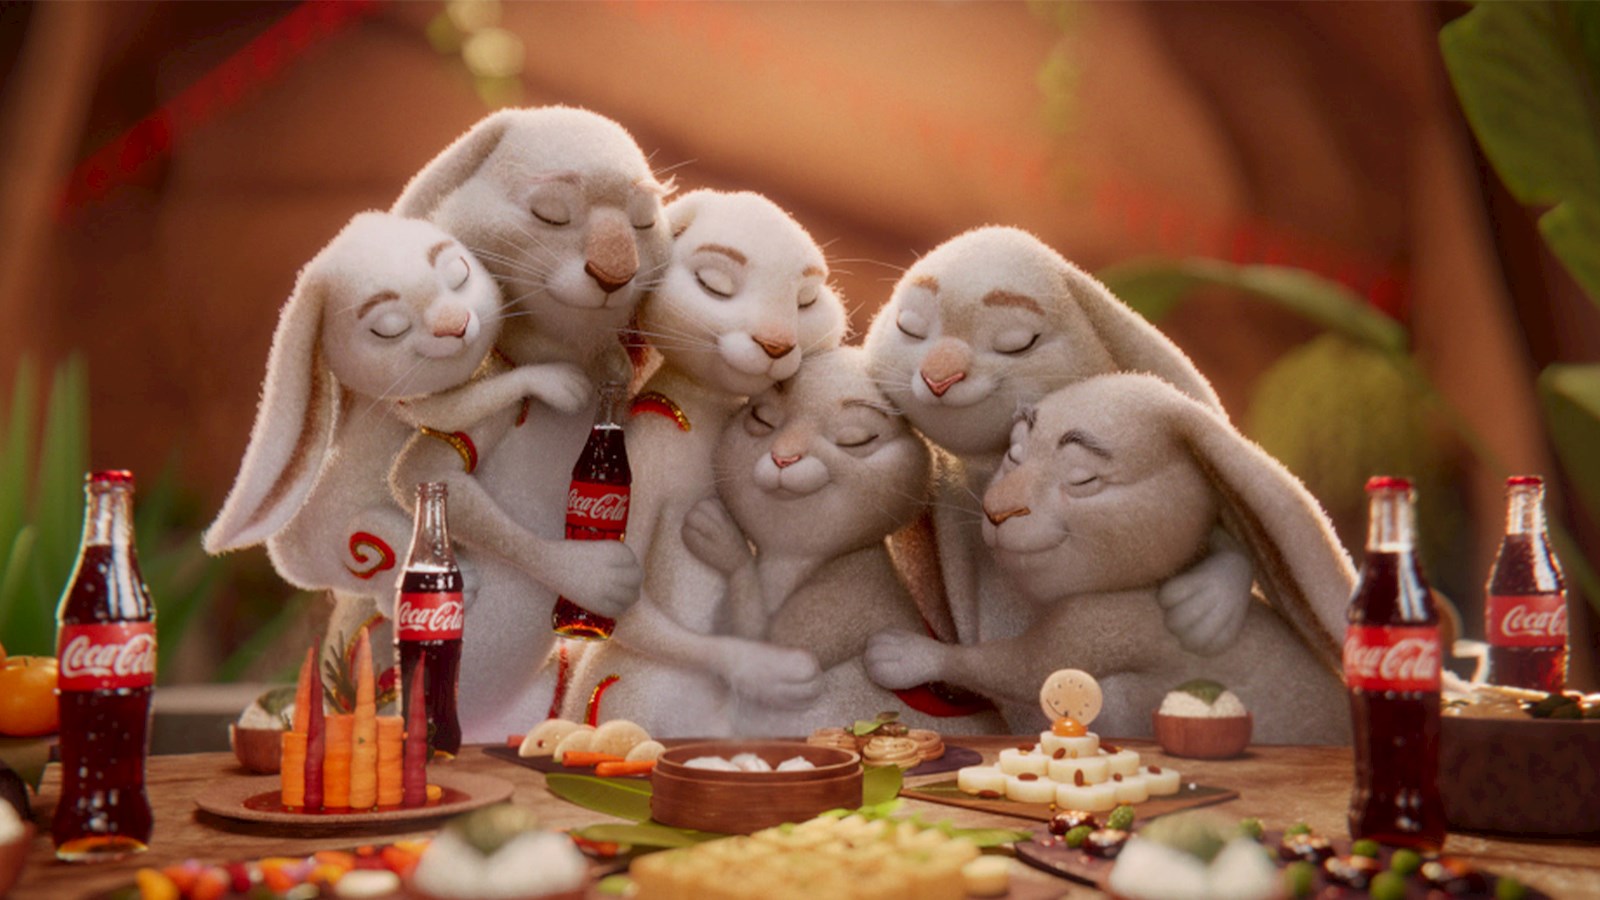 Animated rabbits with Coca Colas 